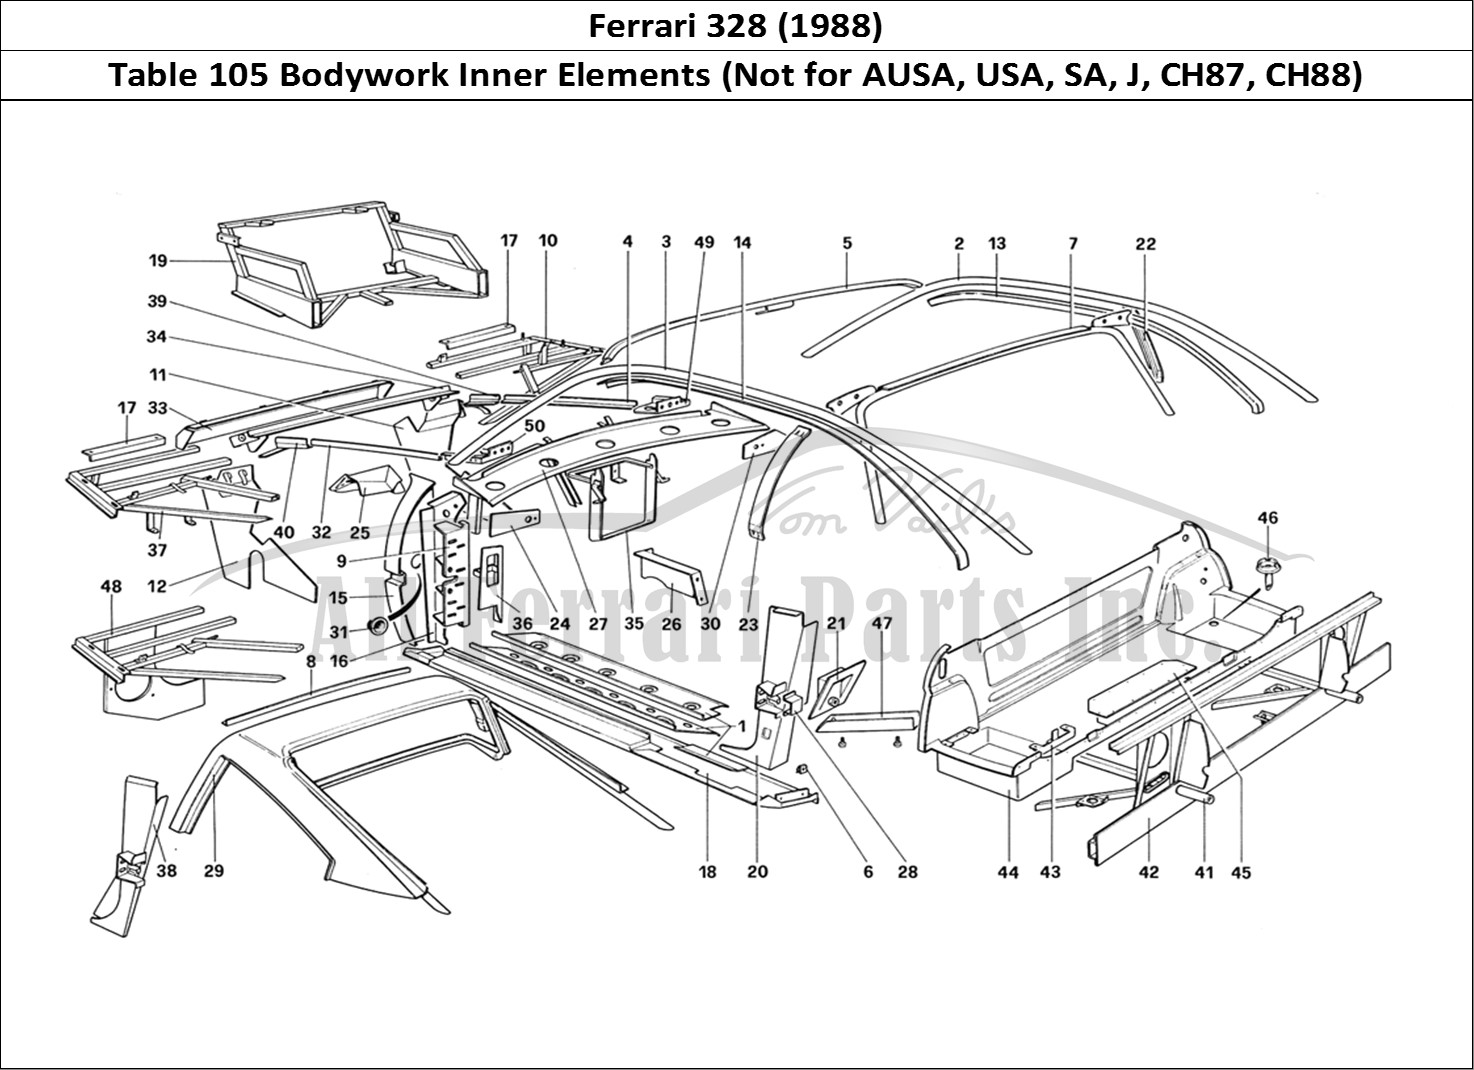 Ferrari Parts Ferrari 328 (1988) Page 105 Body Shell - Inner Elemen